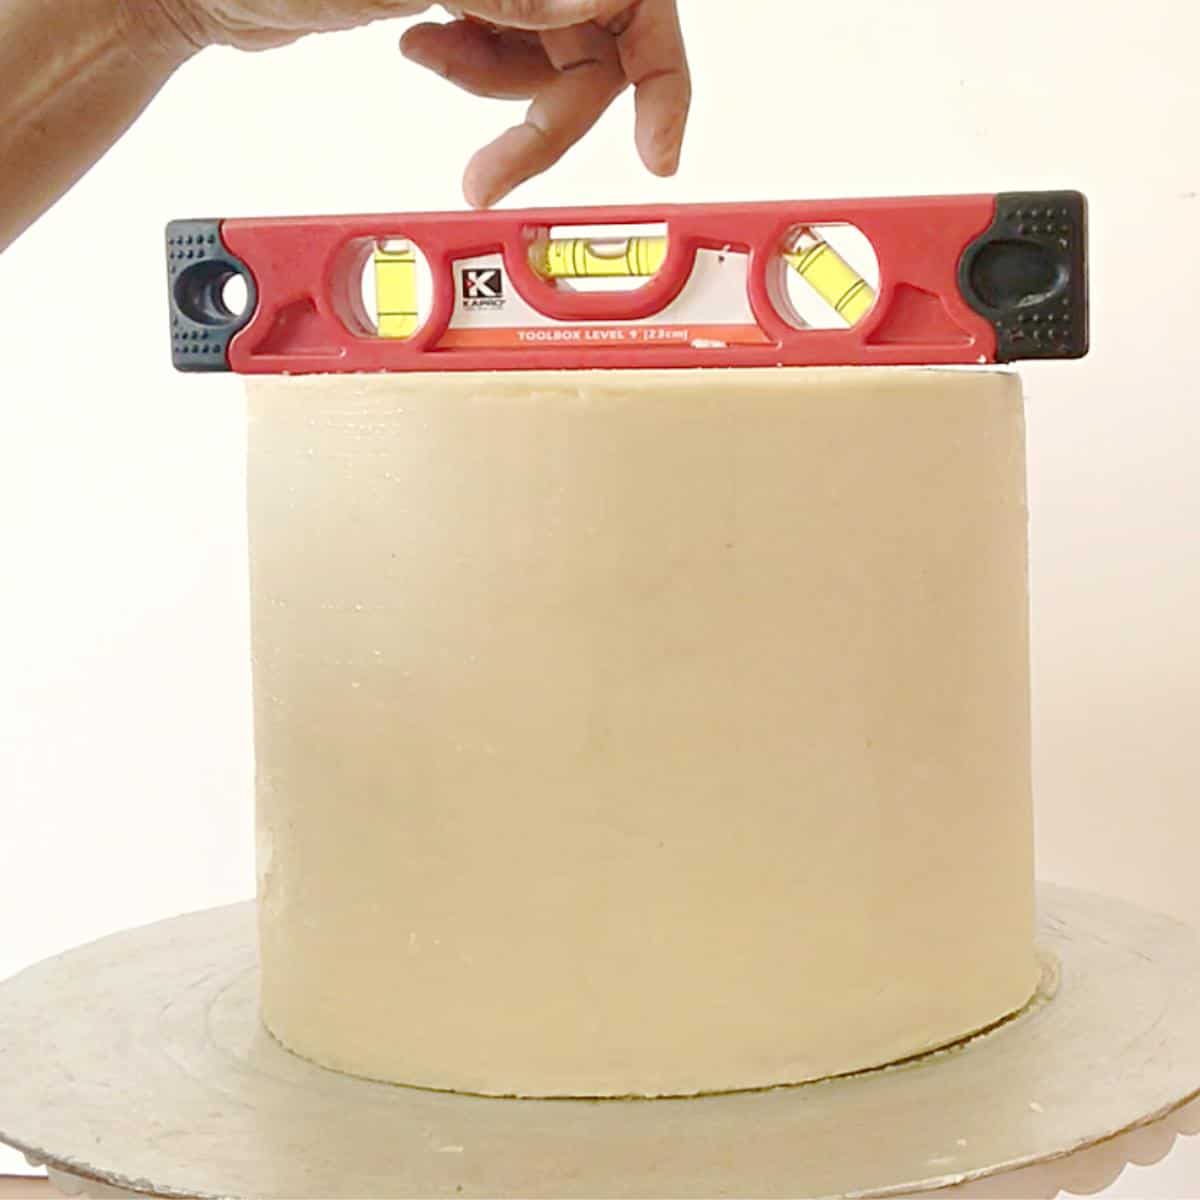 A cake with a cake leveler.